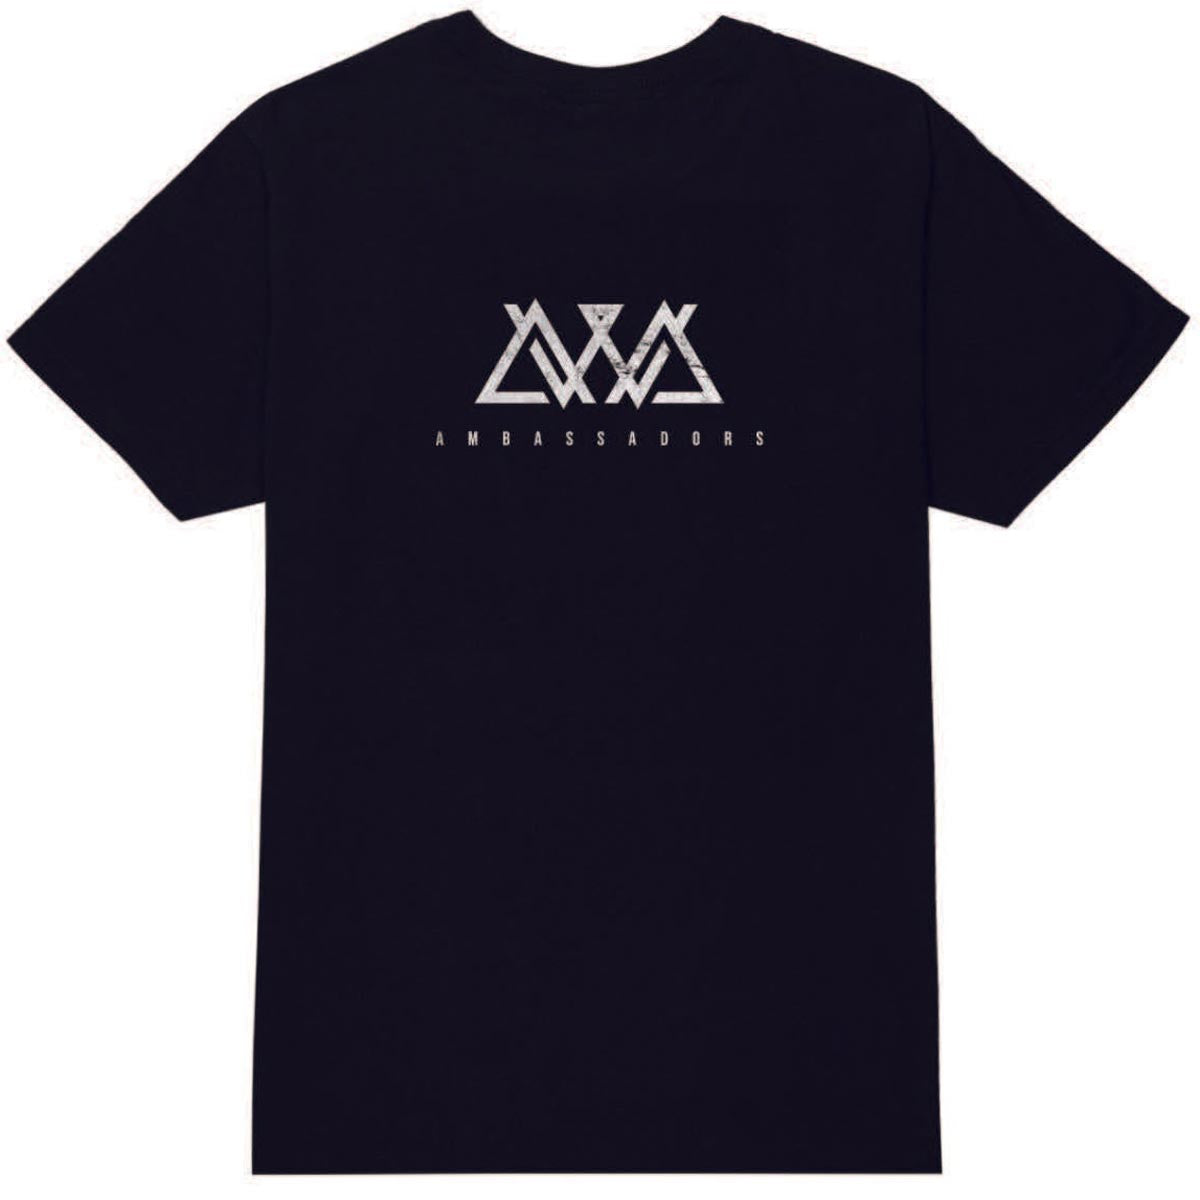 AVVA Gage T-Shirt - Black image 1